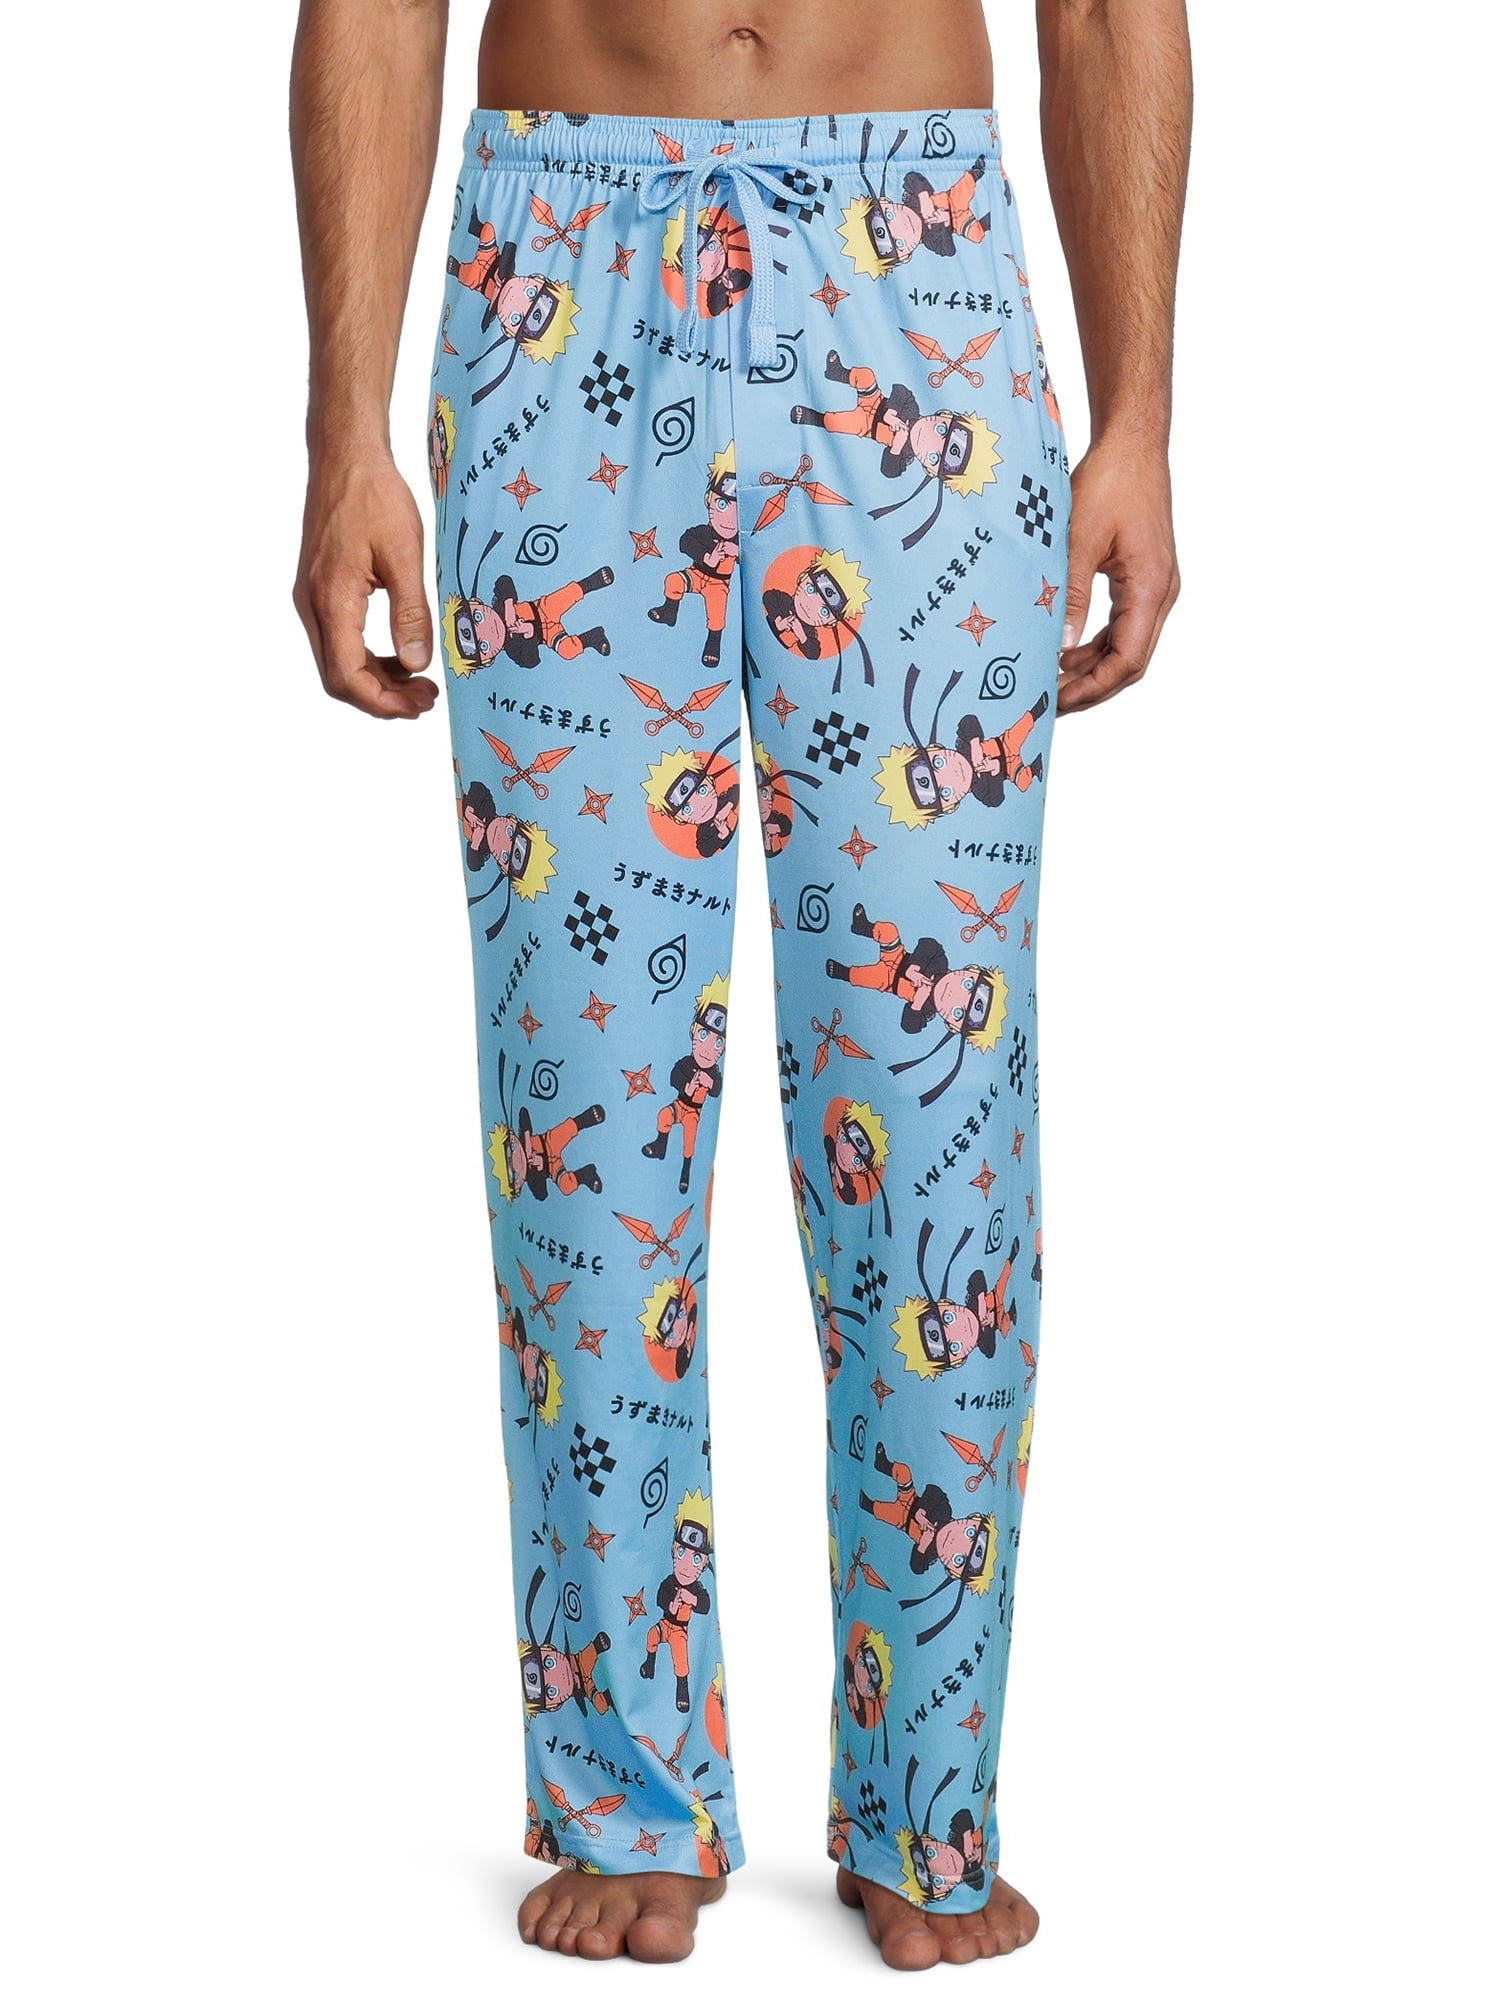 Naruto Shippuden Printed Anime Sleep Pants Pajamas (Men's) 1 Pack -  Walmart.com